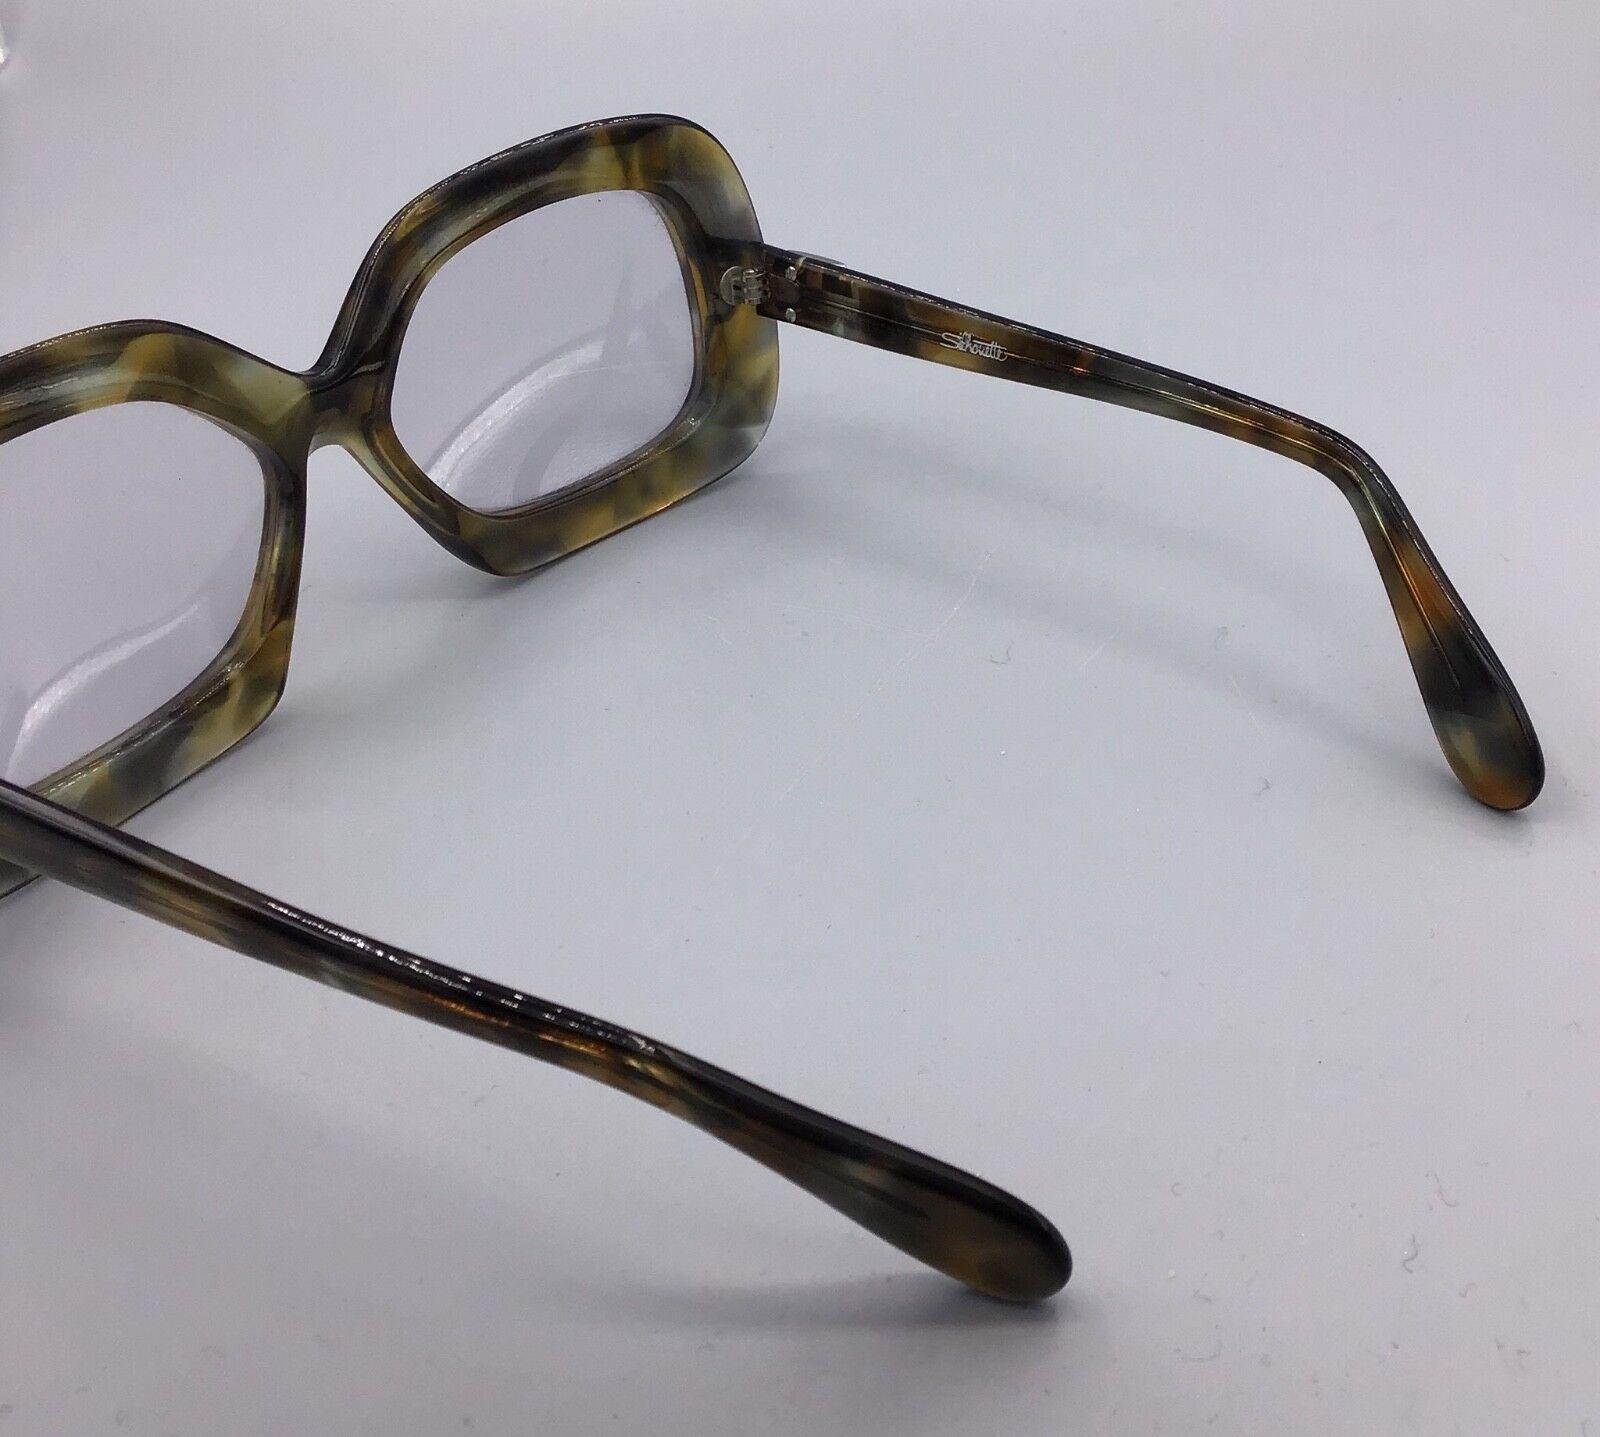 SILHOUETTE occhiale vintage glasses Silhouette eyewear brillen lunettes gafas